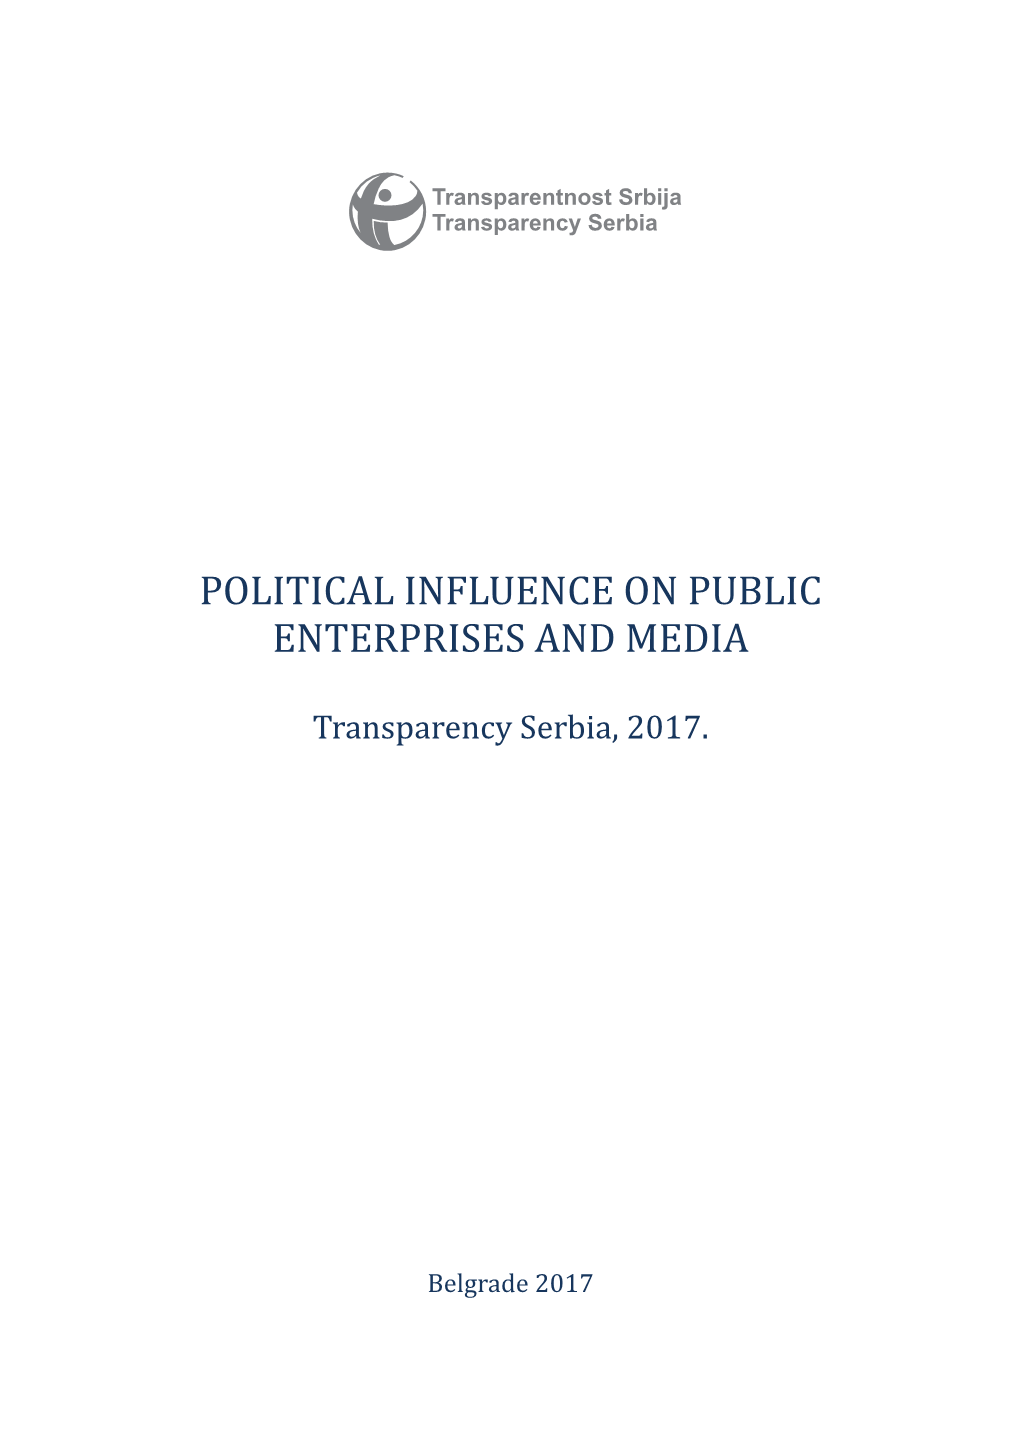 Political Influence on Public Enterprises and Media